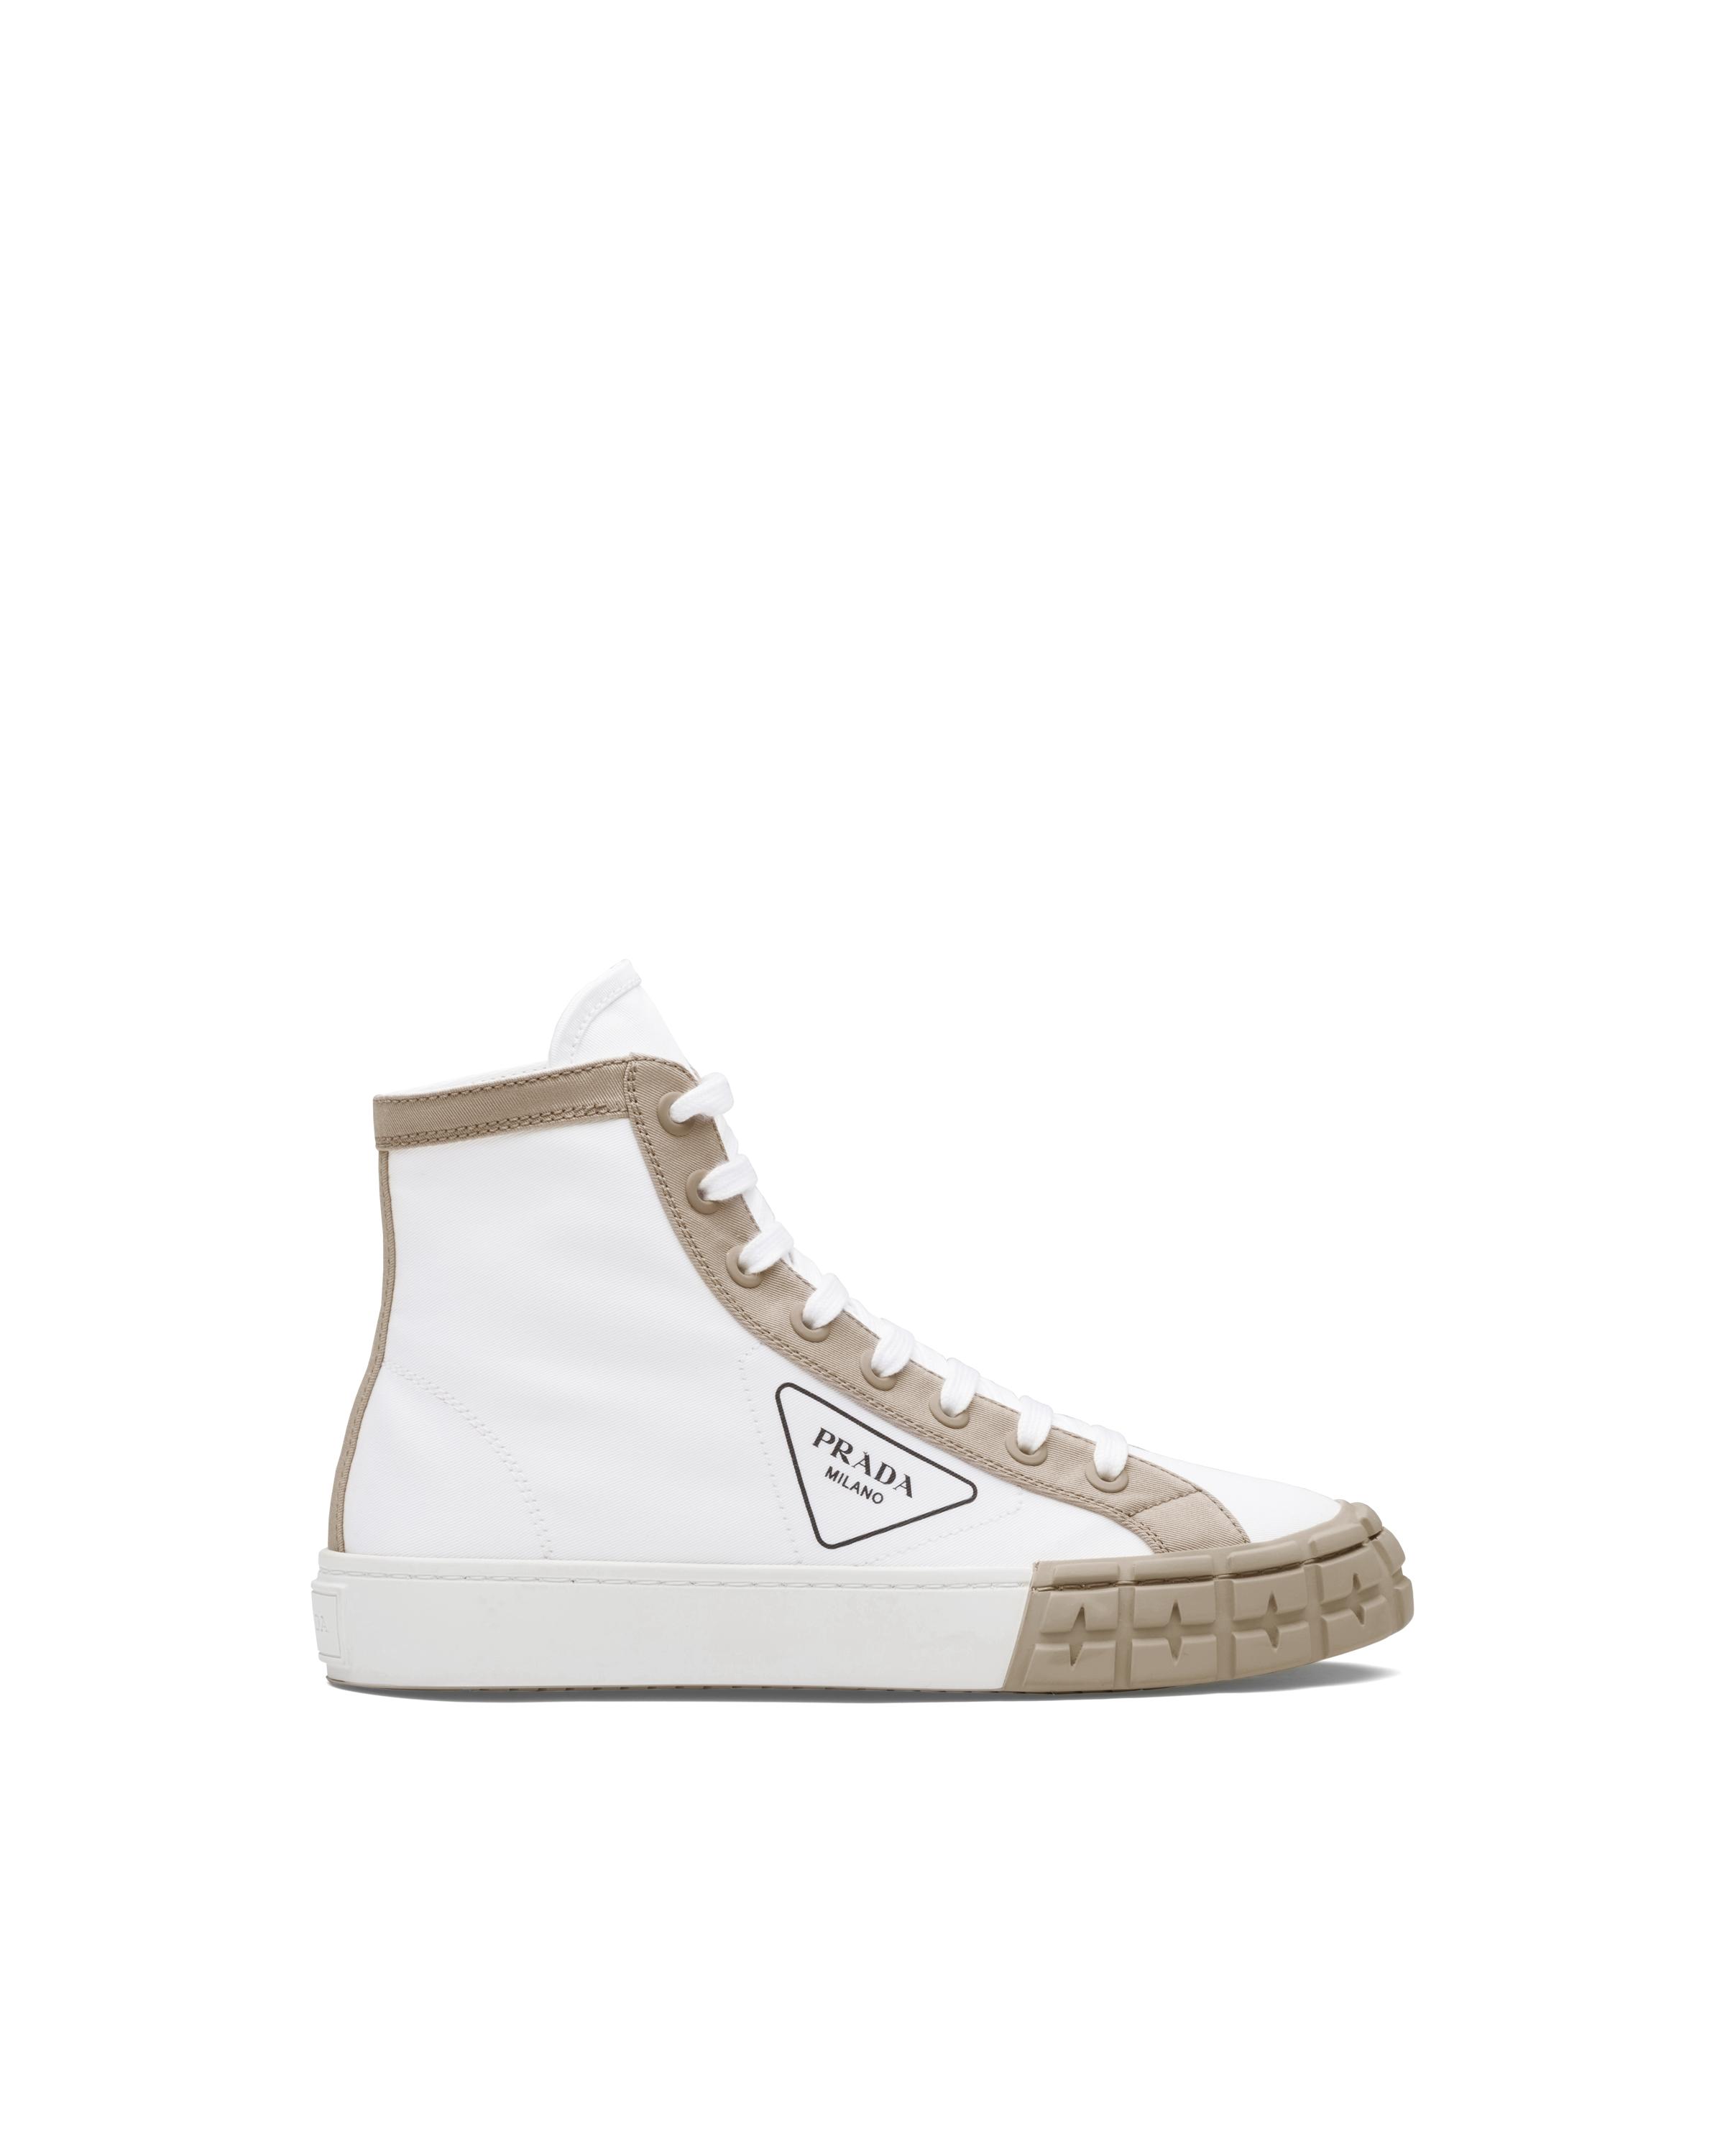 Prada Leather Gabardine Hi-top Sneakers in White - Lyst